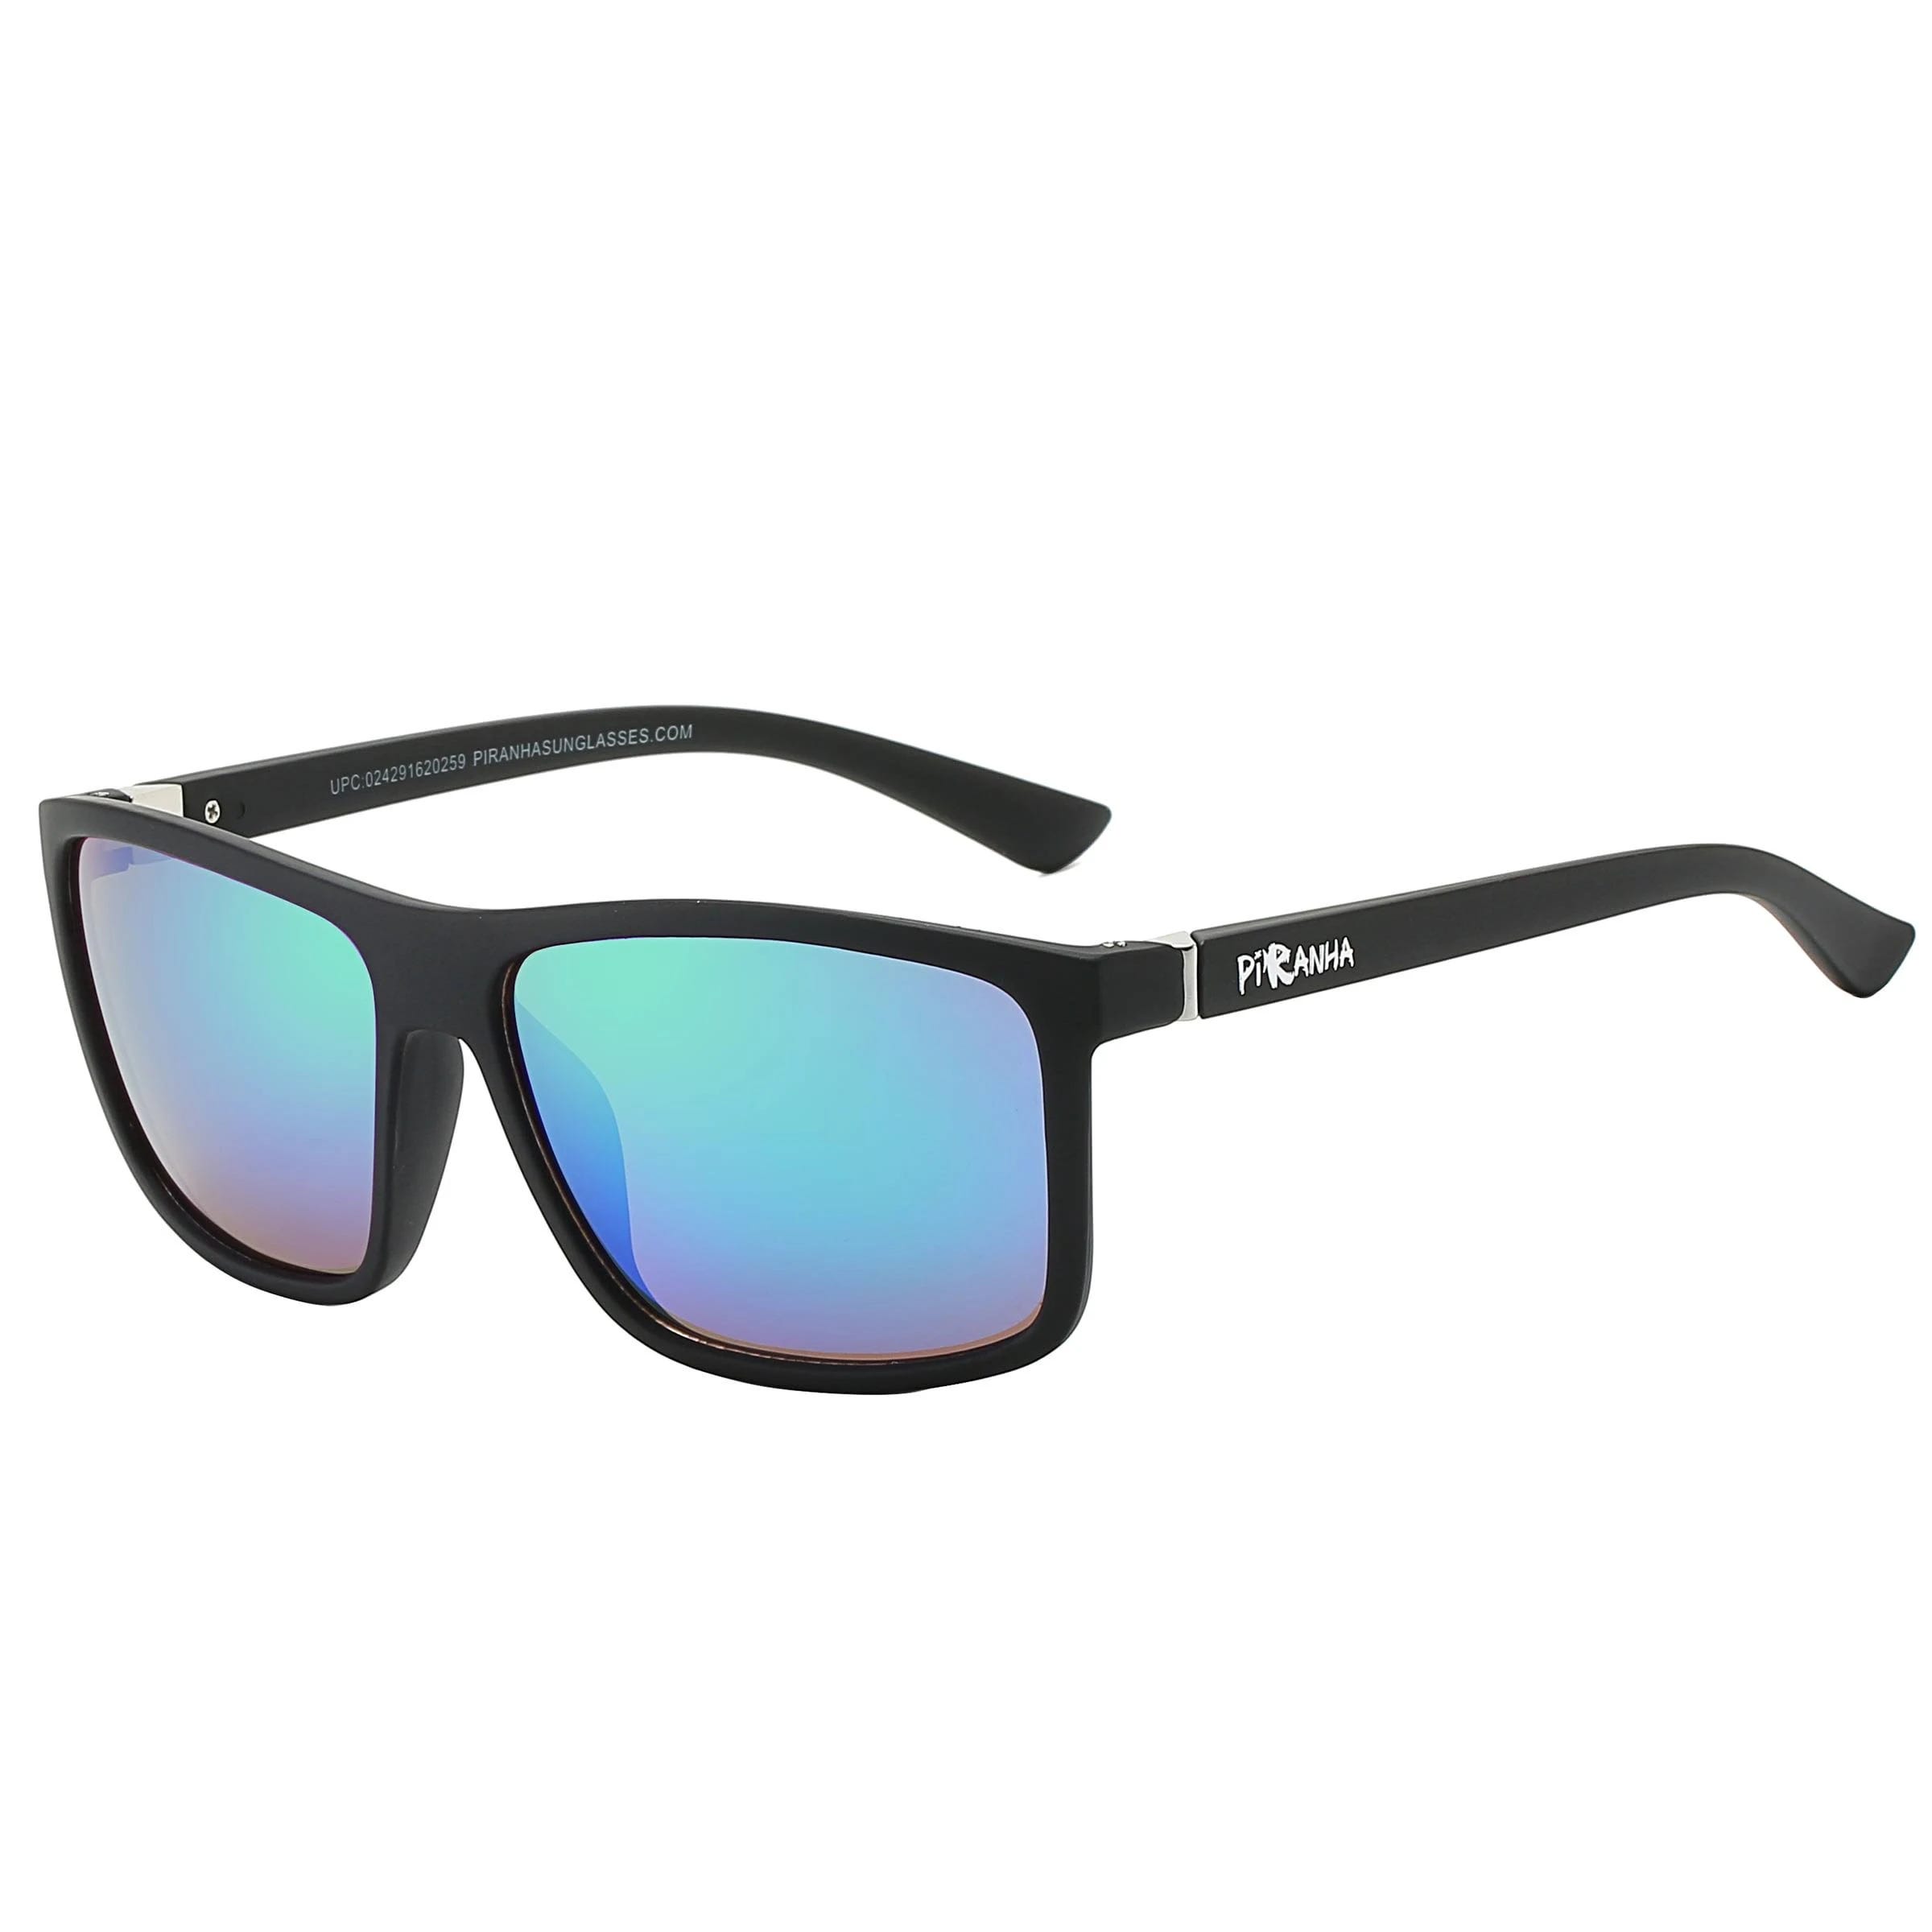 Piranha Xander Black Sunglasses: Classic and Durable Flat-Top Design | Image